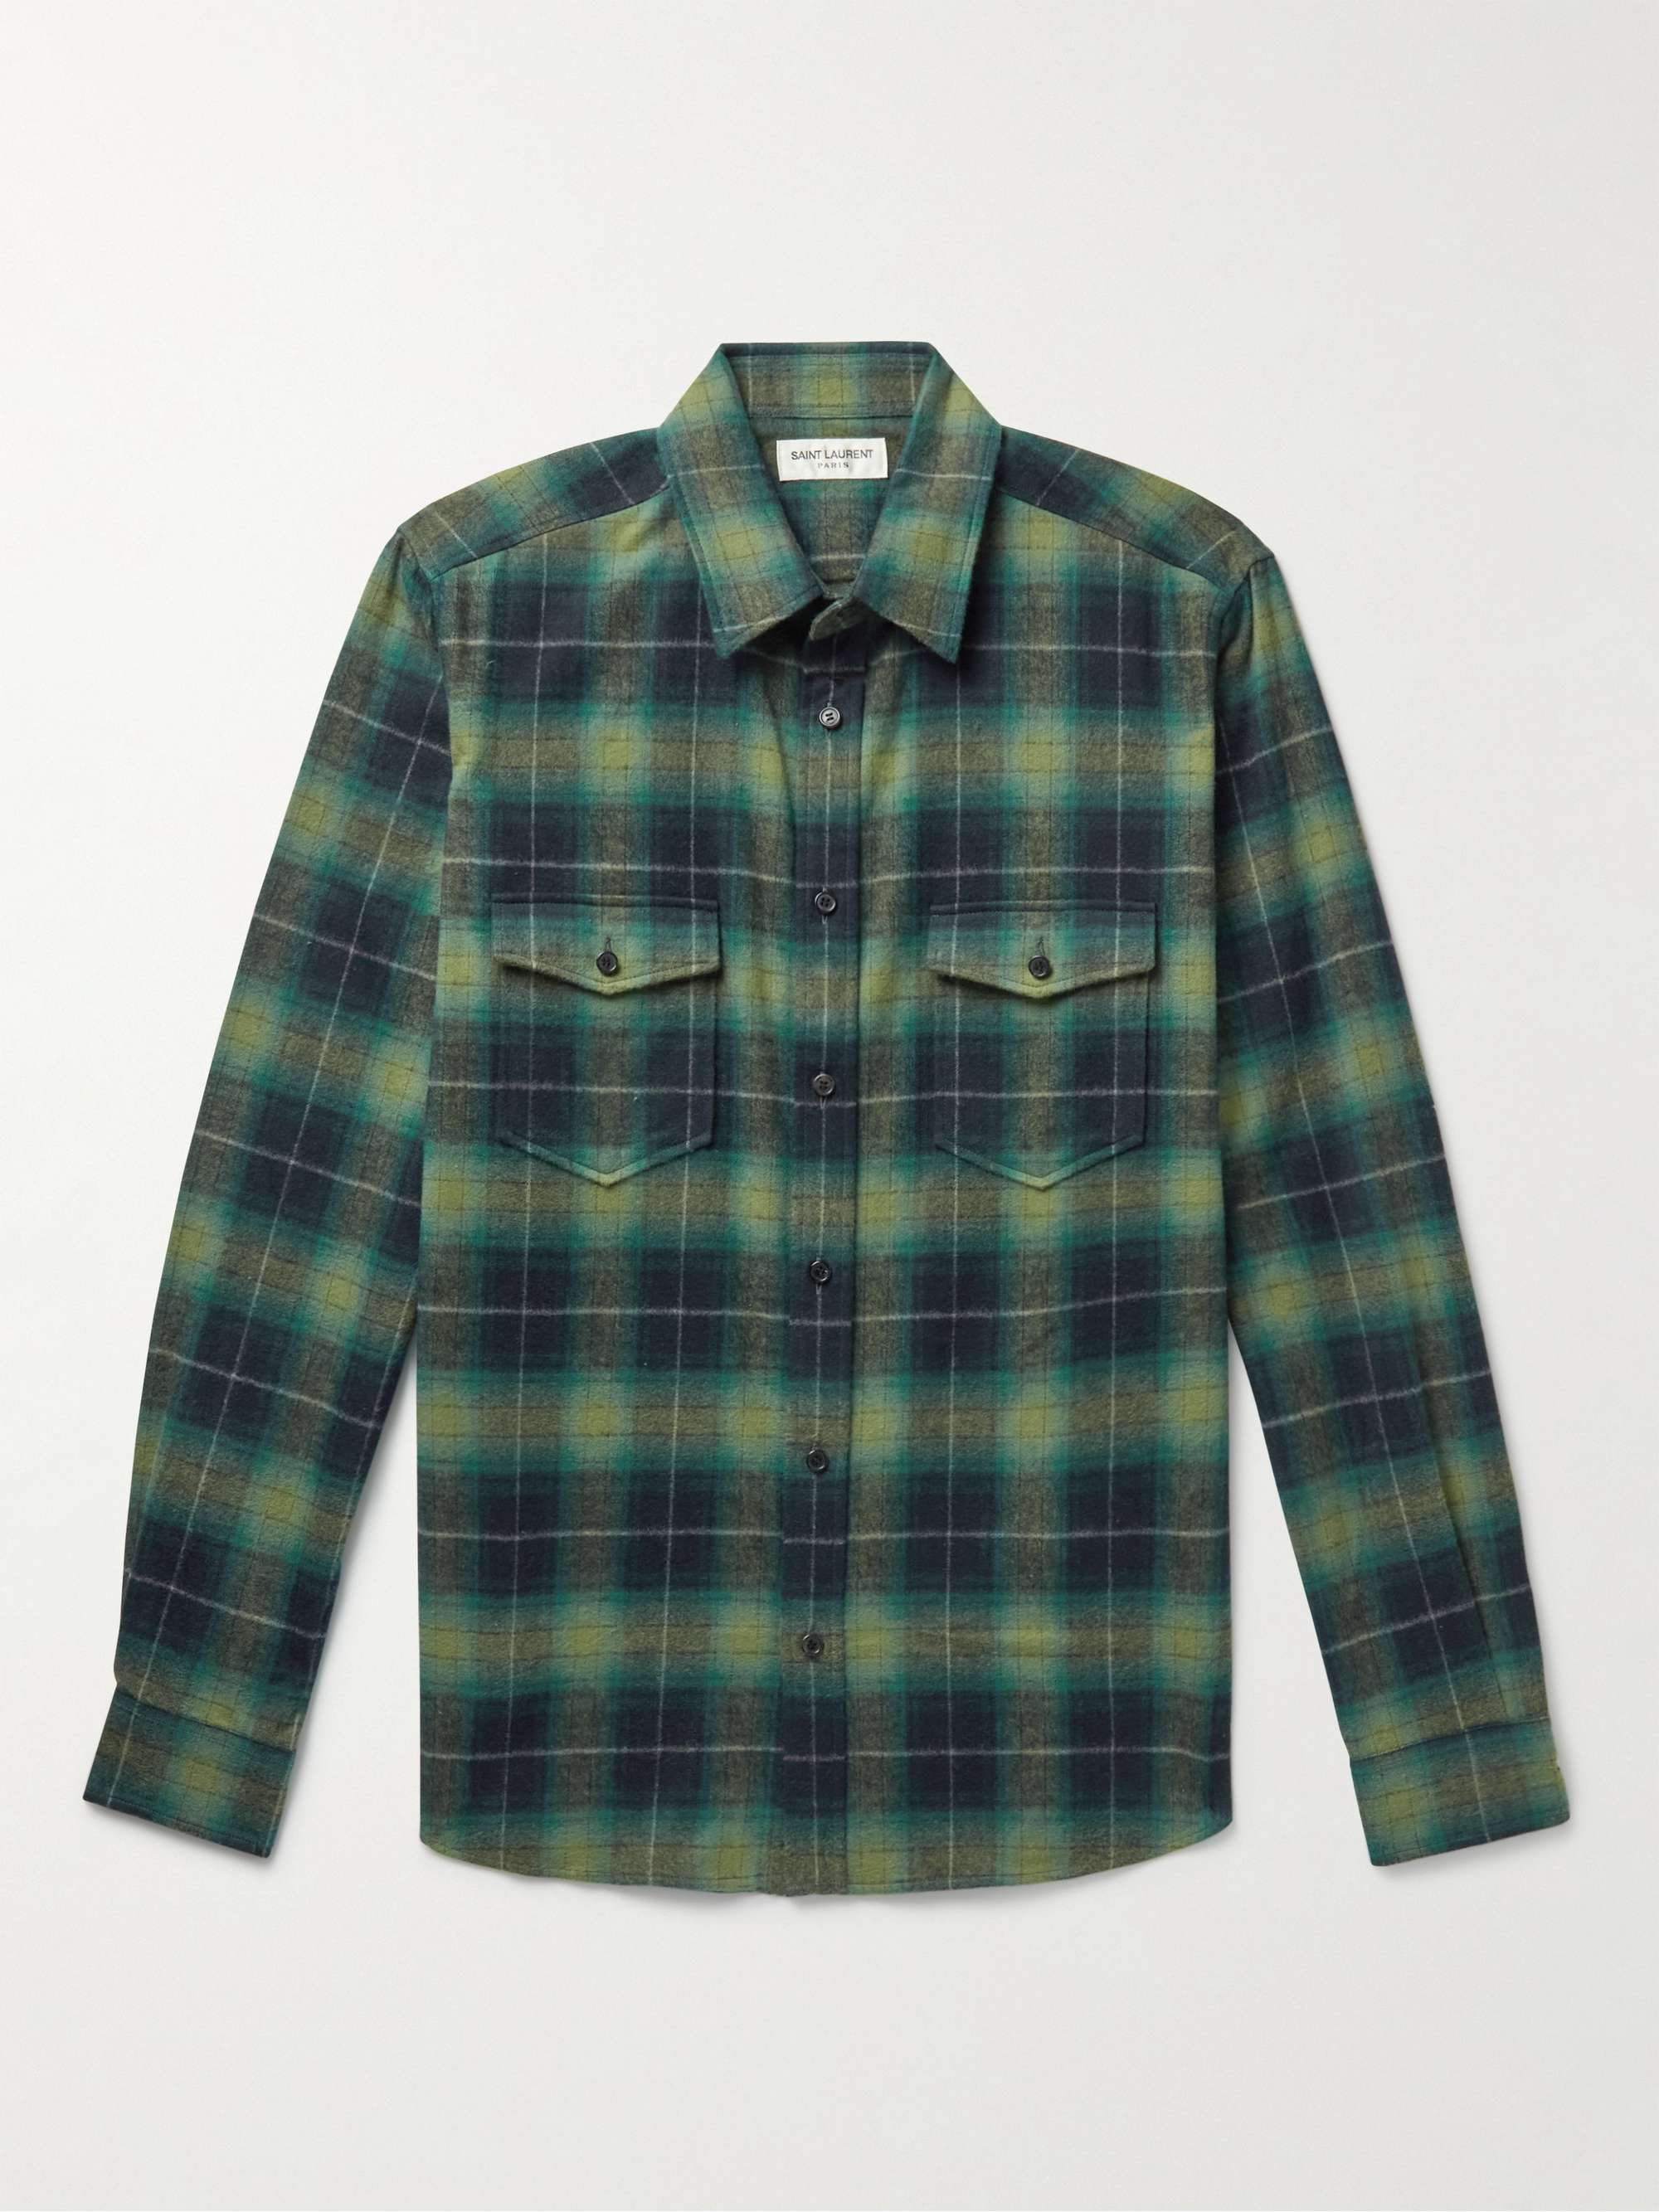 SAINT LAURENT Checked Cotton-Flannel Shirt for Men | MR PORTER